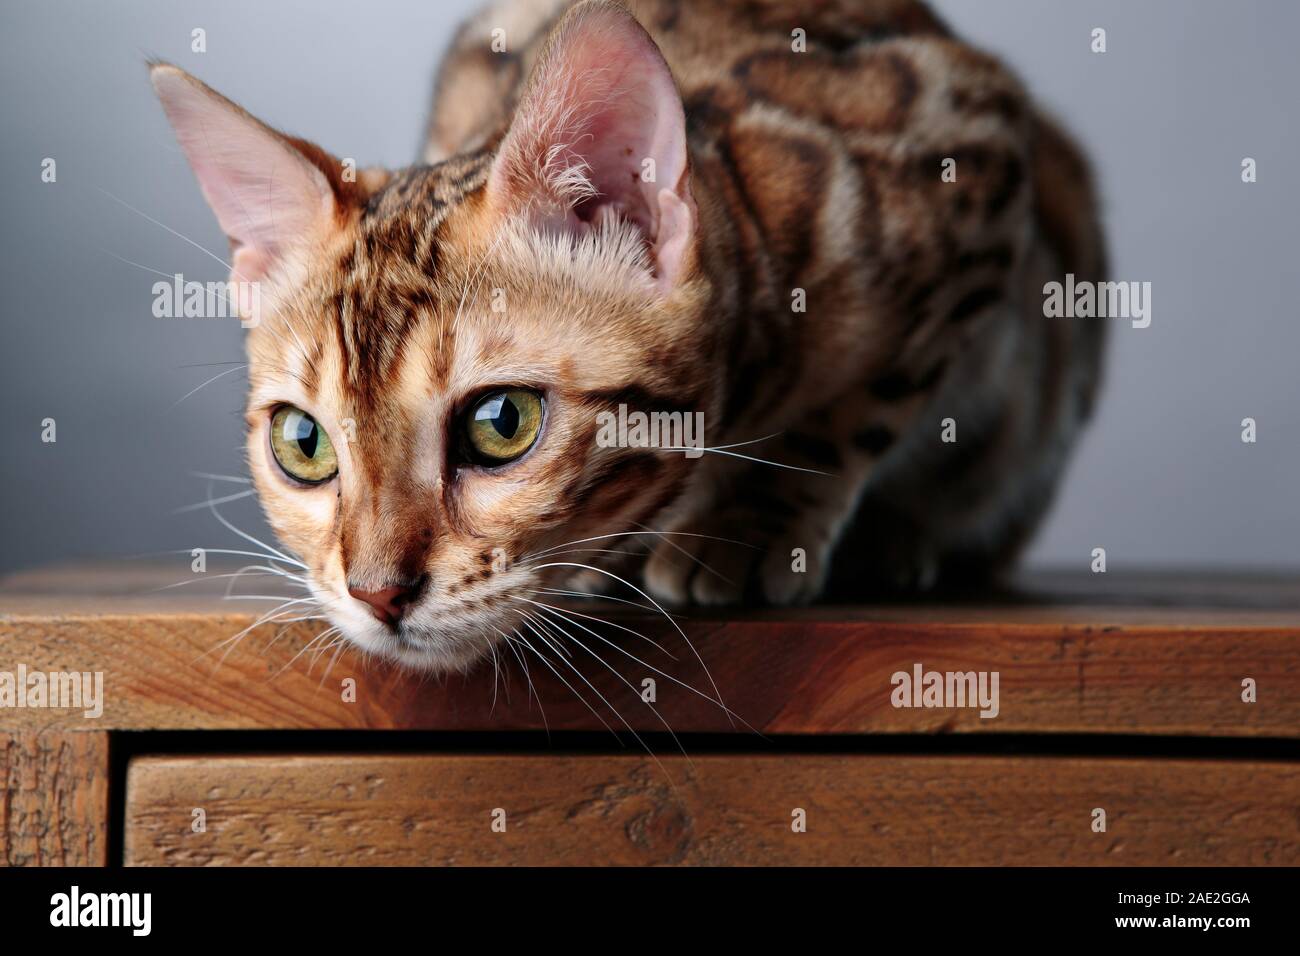 Young Bengal Cat Studio Portrait on desk Stock Photo